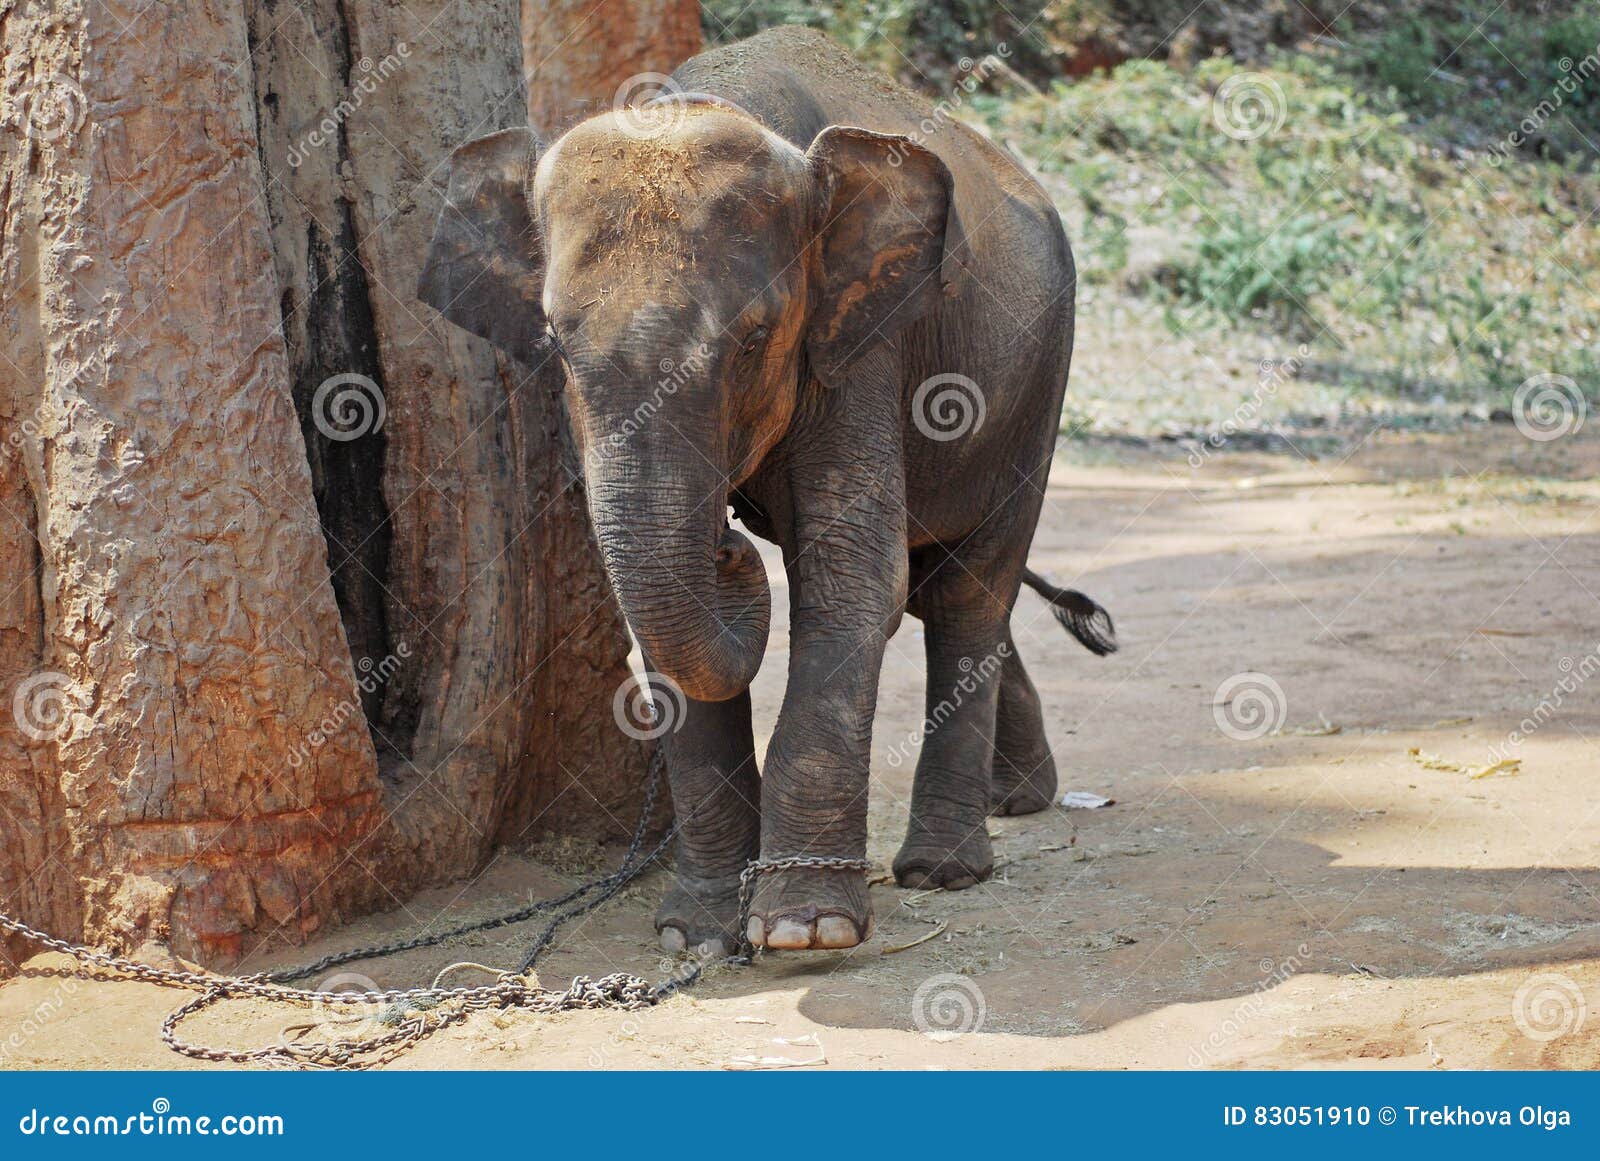 Little Elephant : aww